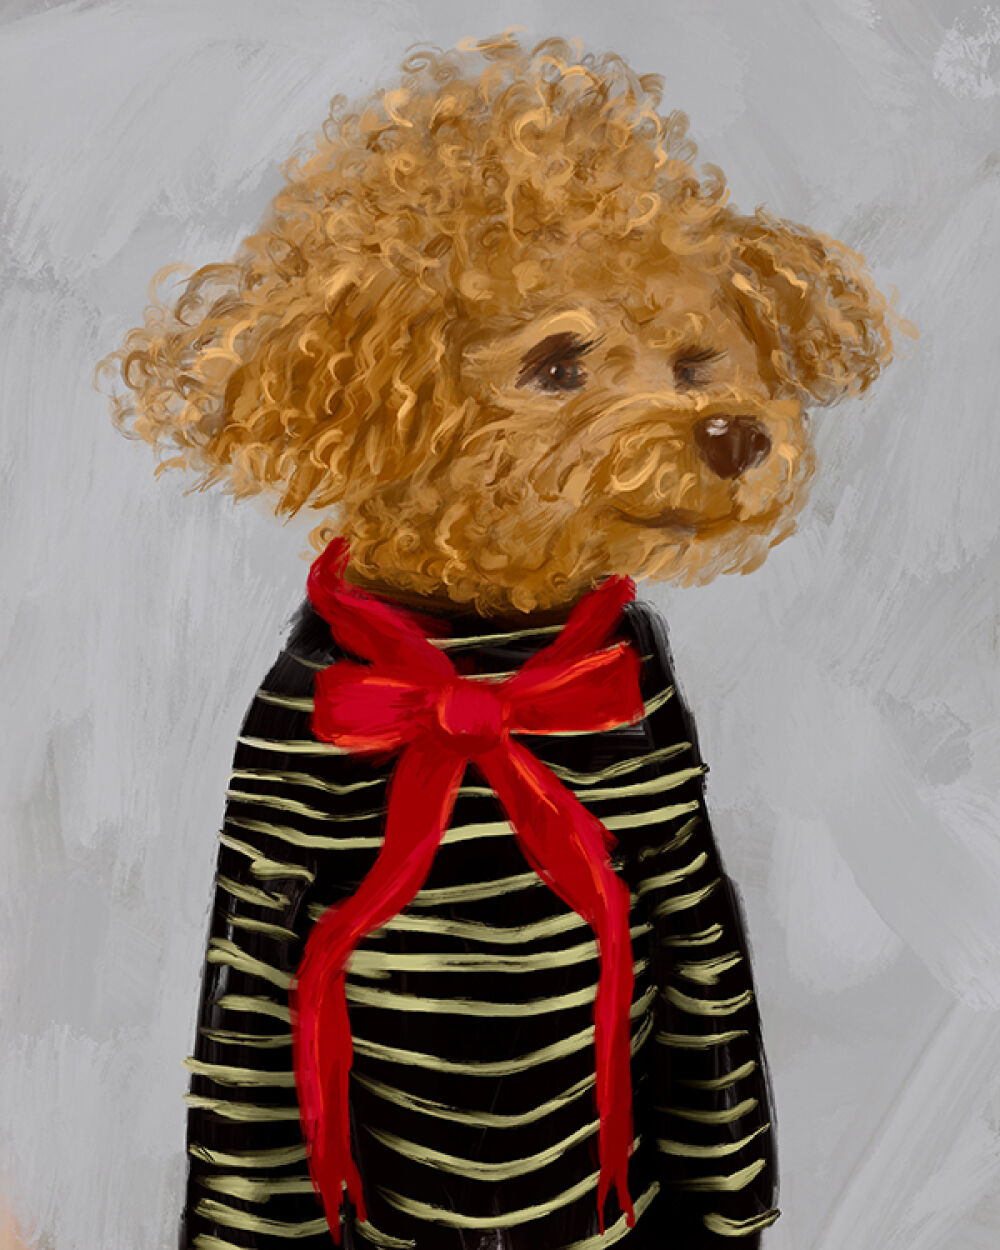 Dog portrait by Christina Gliha 